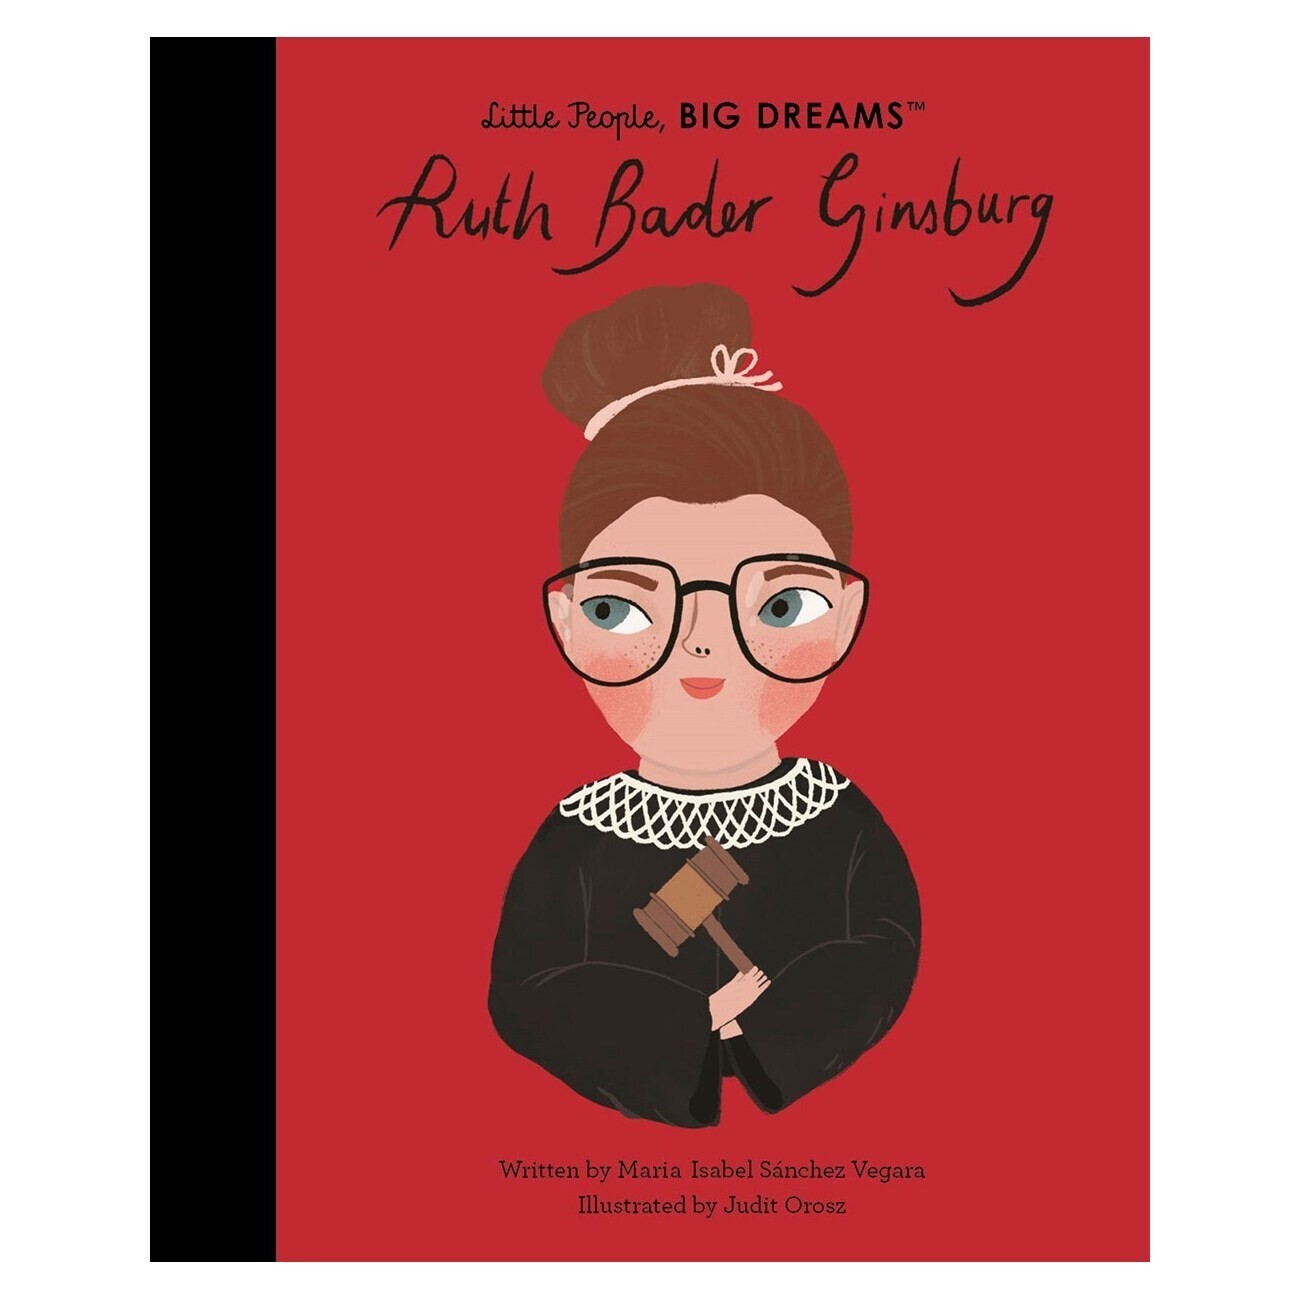 Little People Big Dreams: Ruth Bader Ginsburg